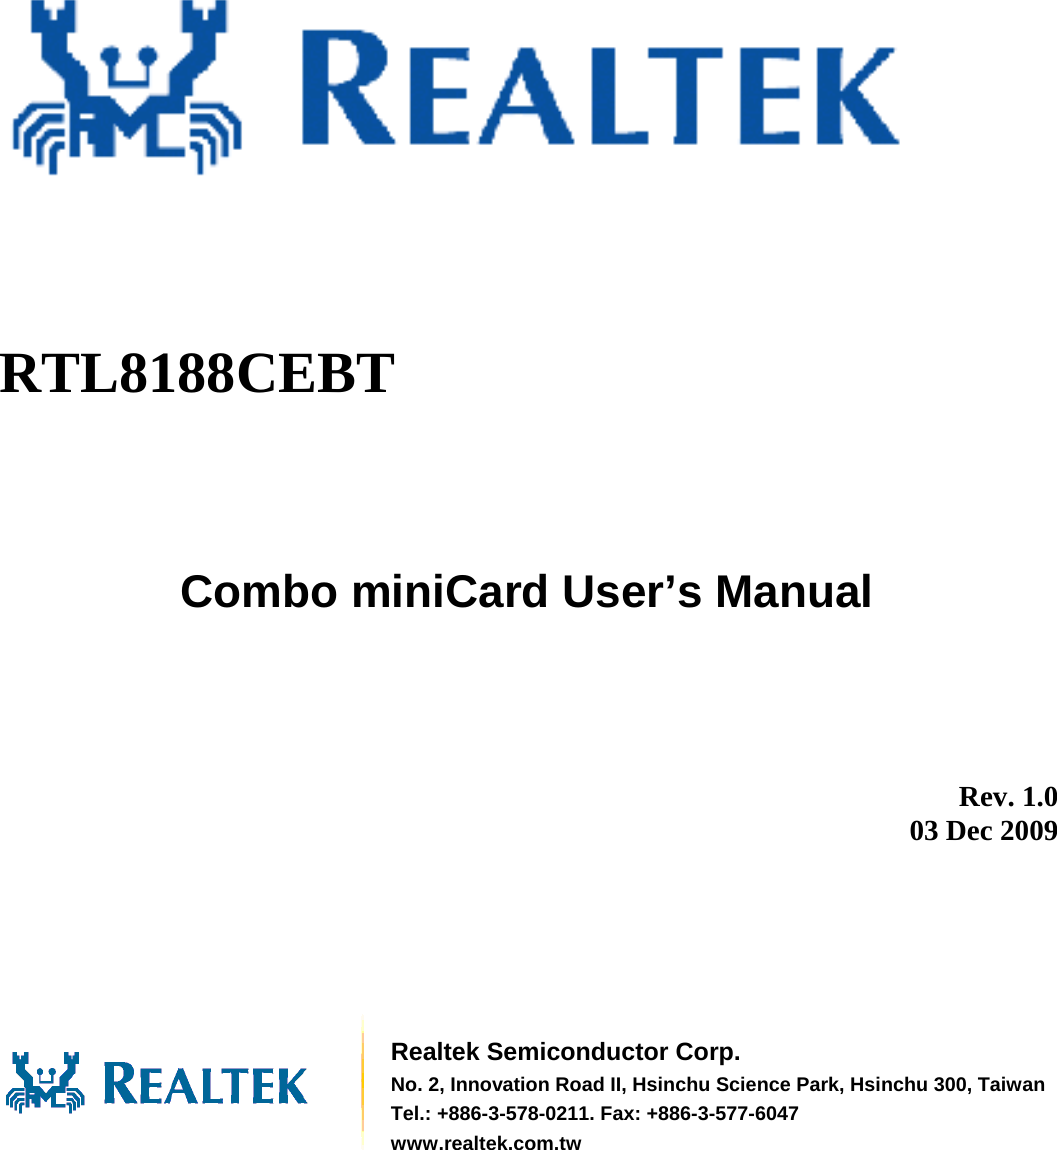               RTL8188CEBT  Combo miniCard User’s Manual          Rev. 1.0 03 Dec 2009        Realtek Semiconductor Corp. No. 2, Innovation Road II, Hsinchu Science Park, Hsinchu 300, TaiwanTel.: +886-3-578-0211. Fax: +886-3-577-6047 www.realtek.com.tw 